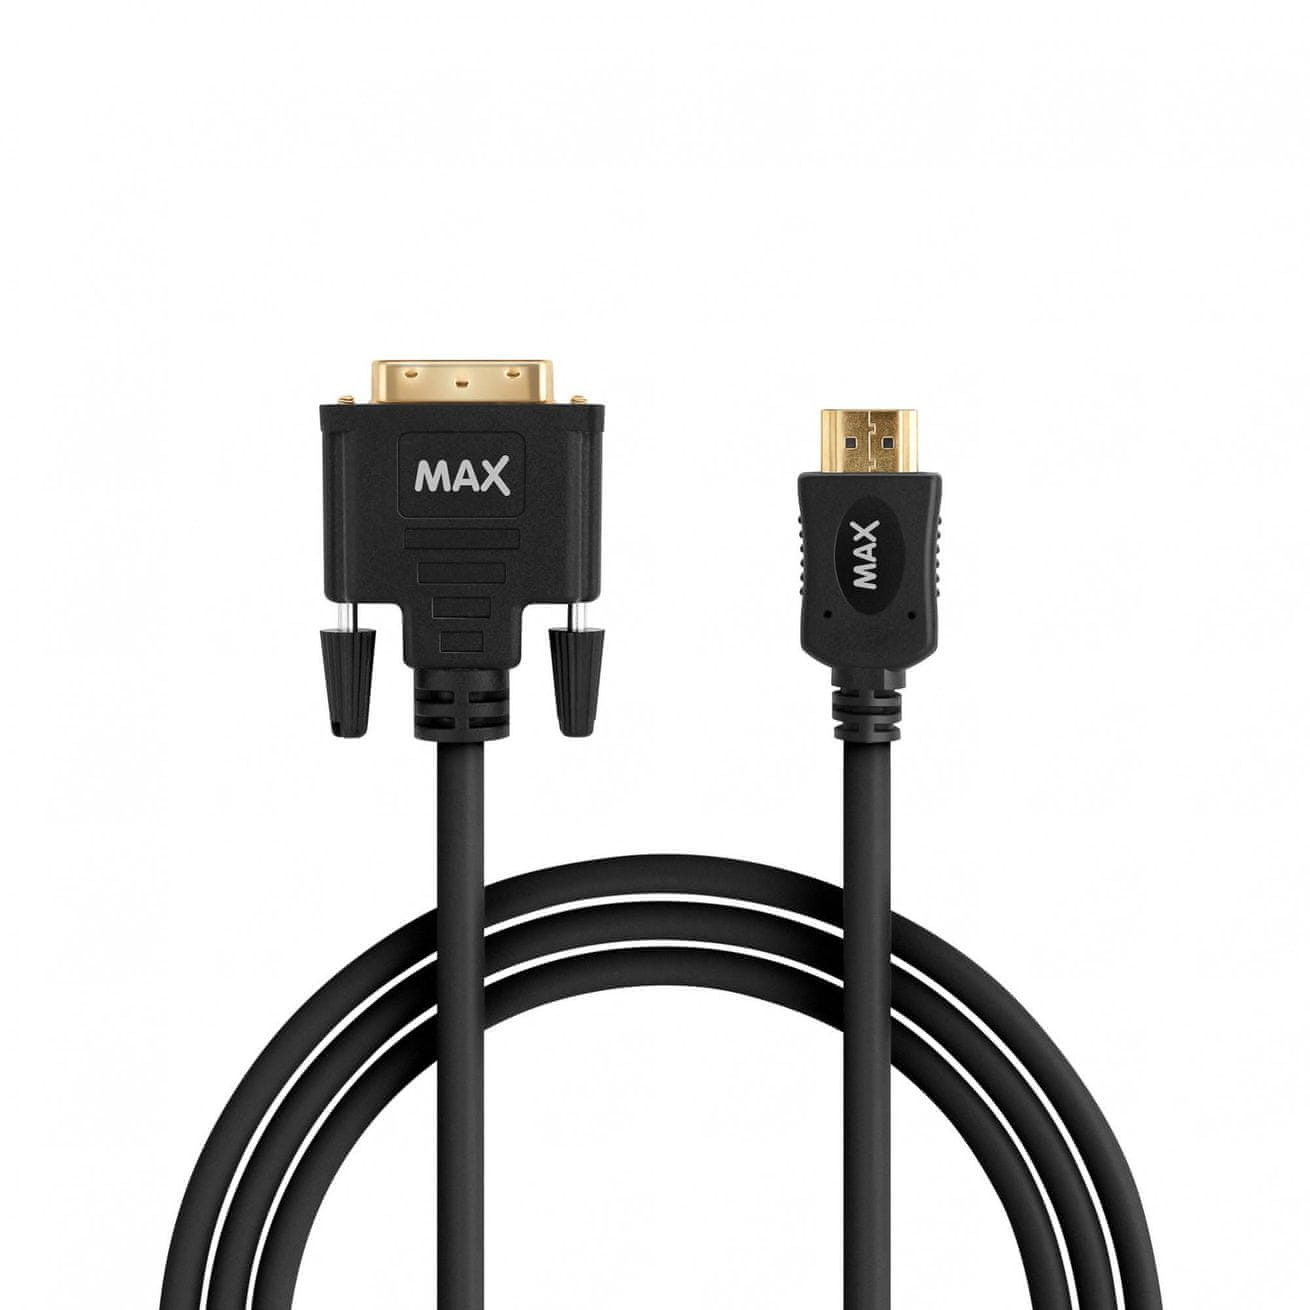 MAX propojovací kabel DVI-D MDH1200B, černý